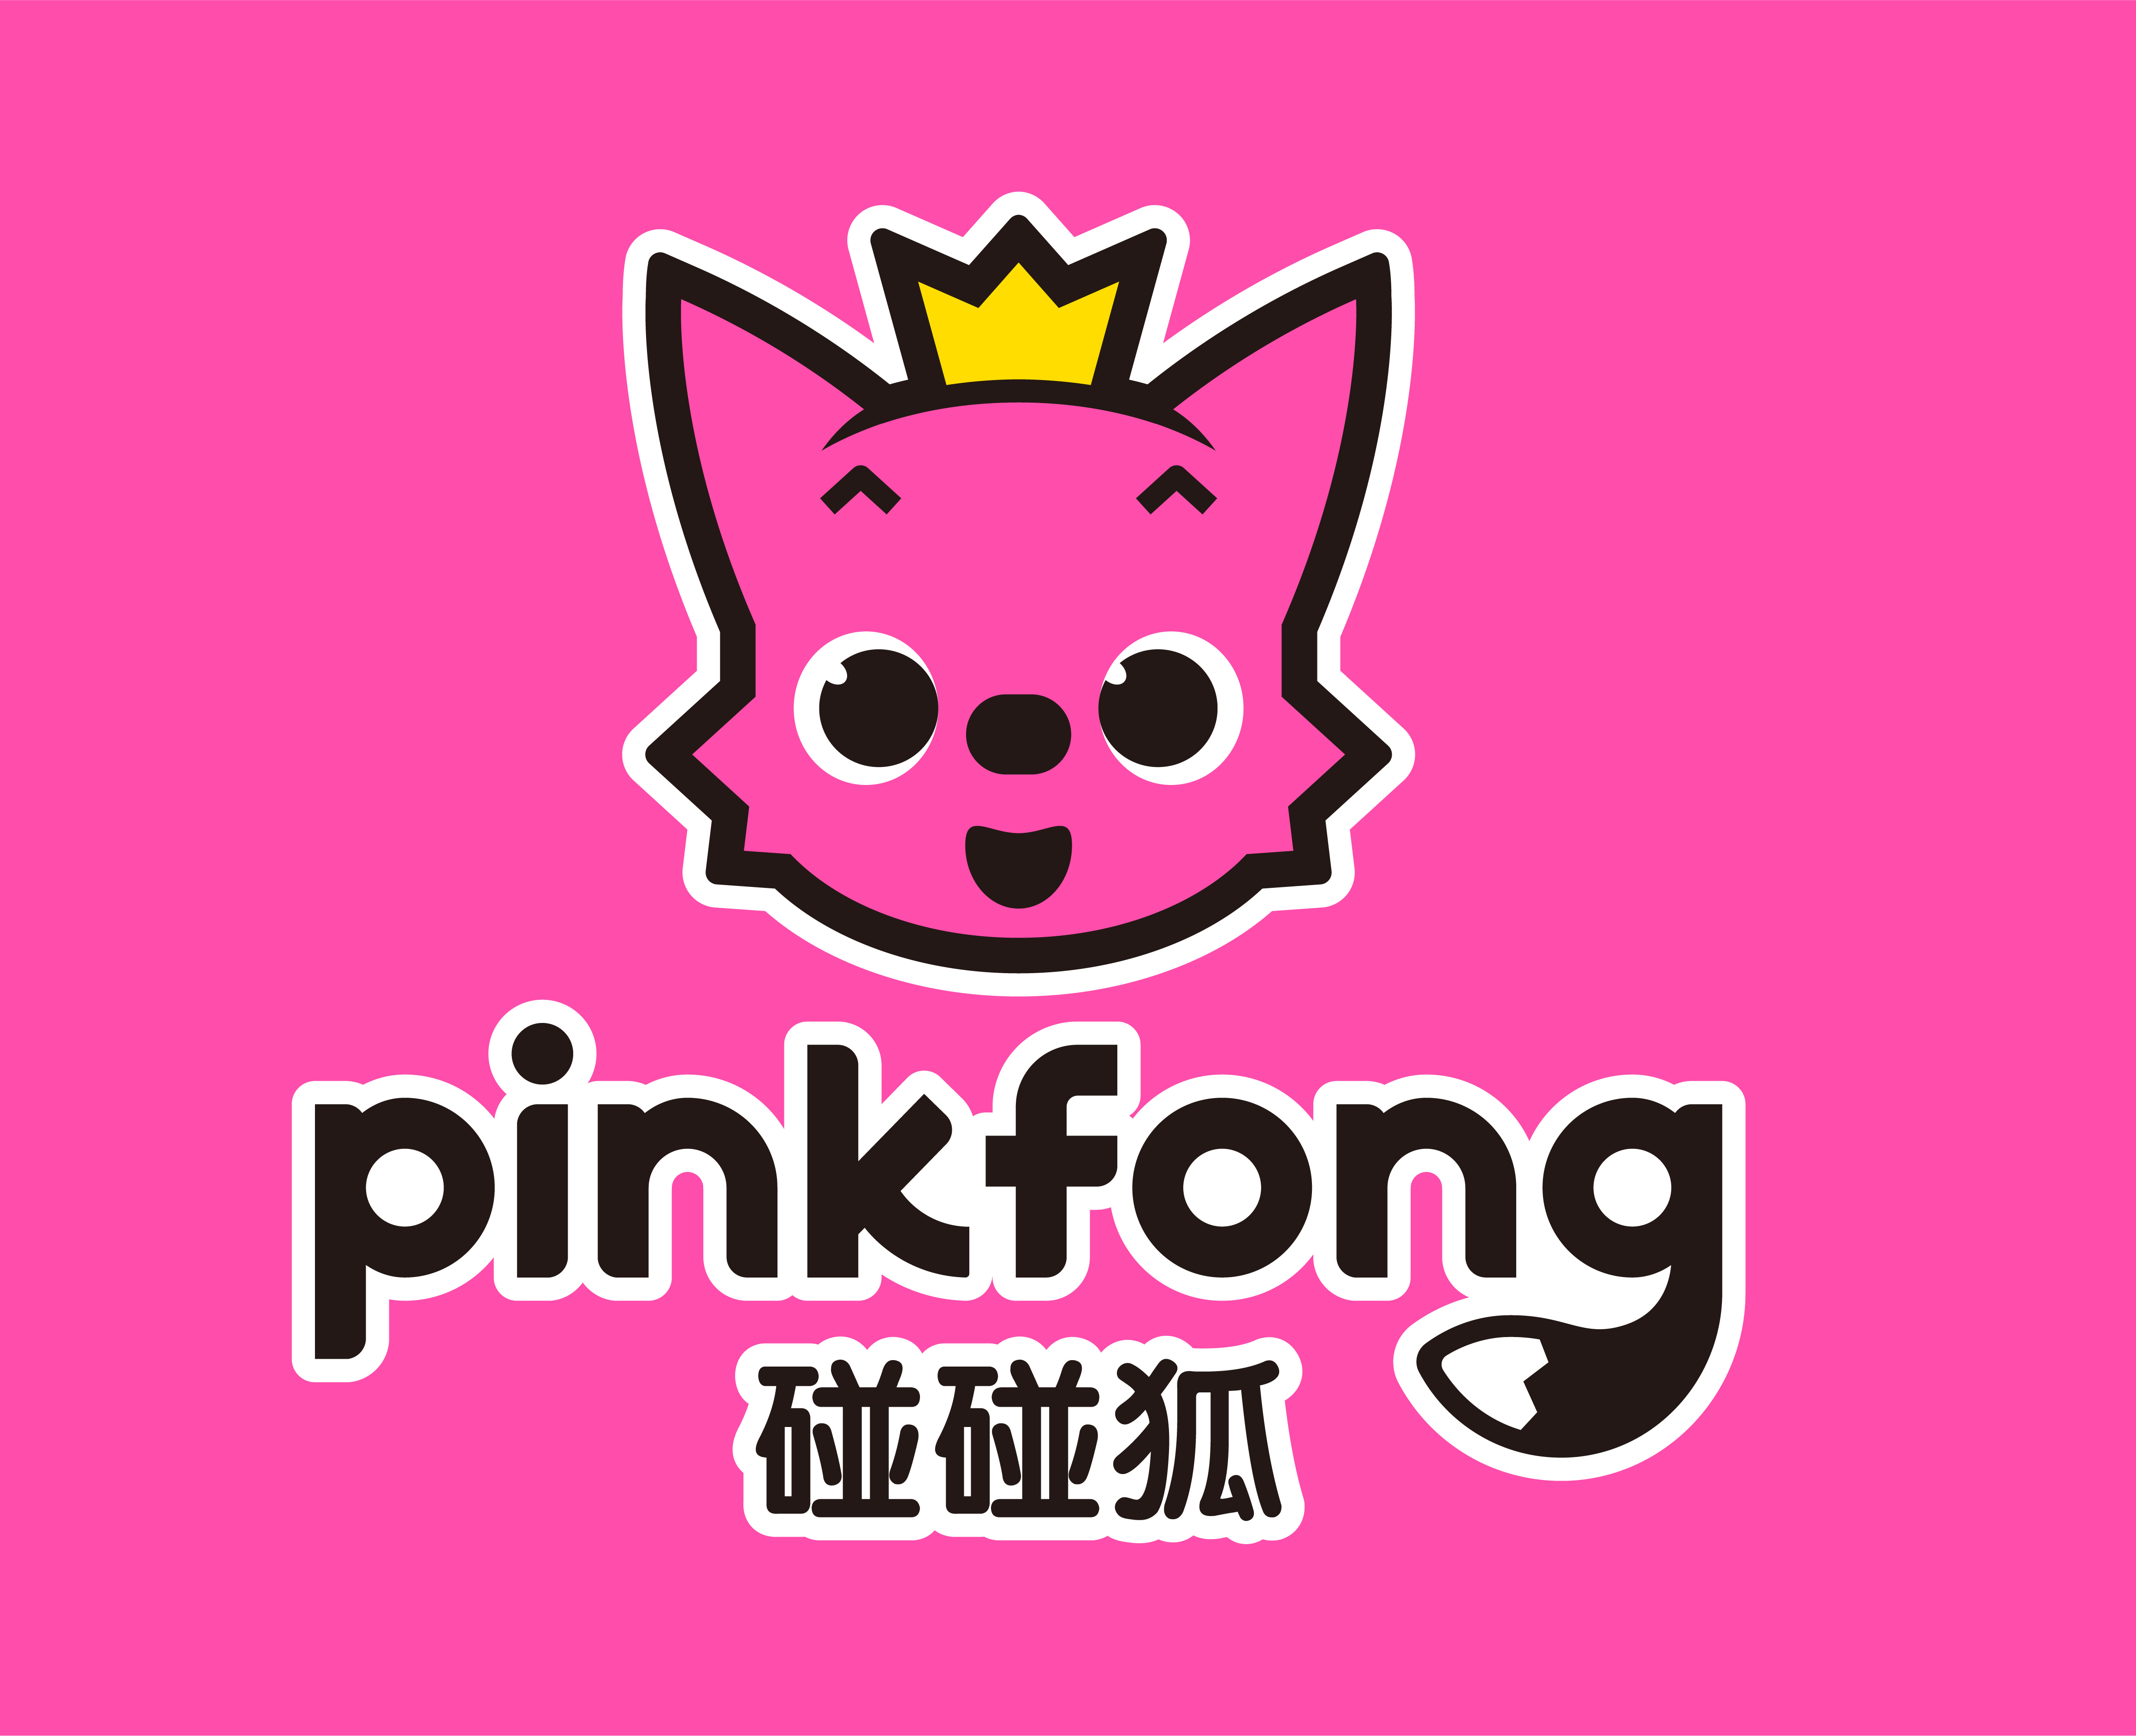 Pink fong net worth